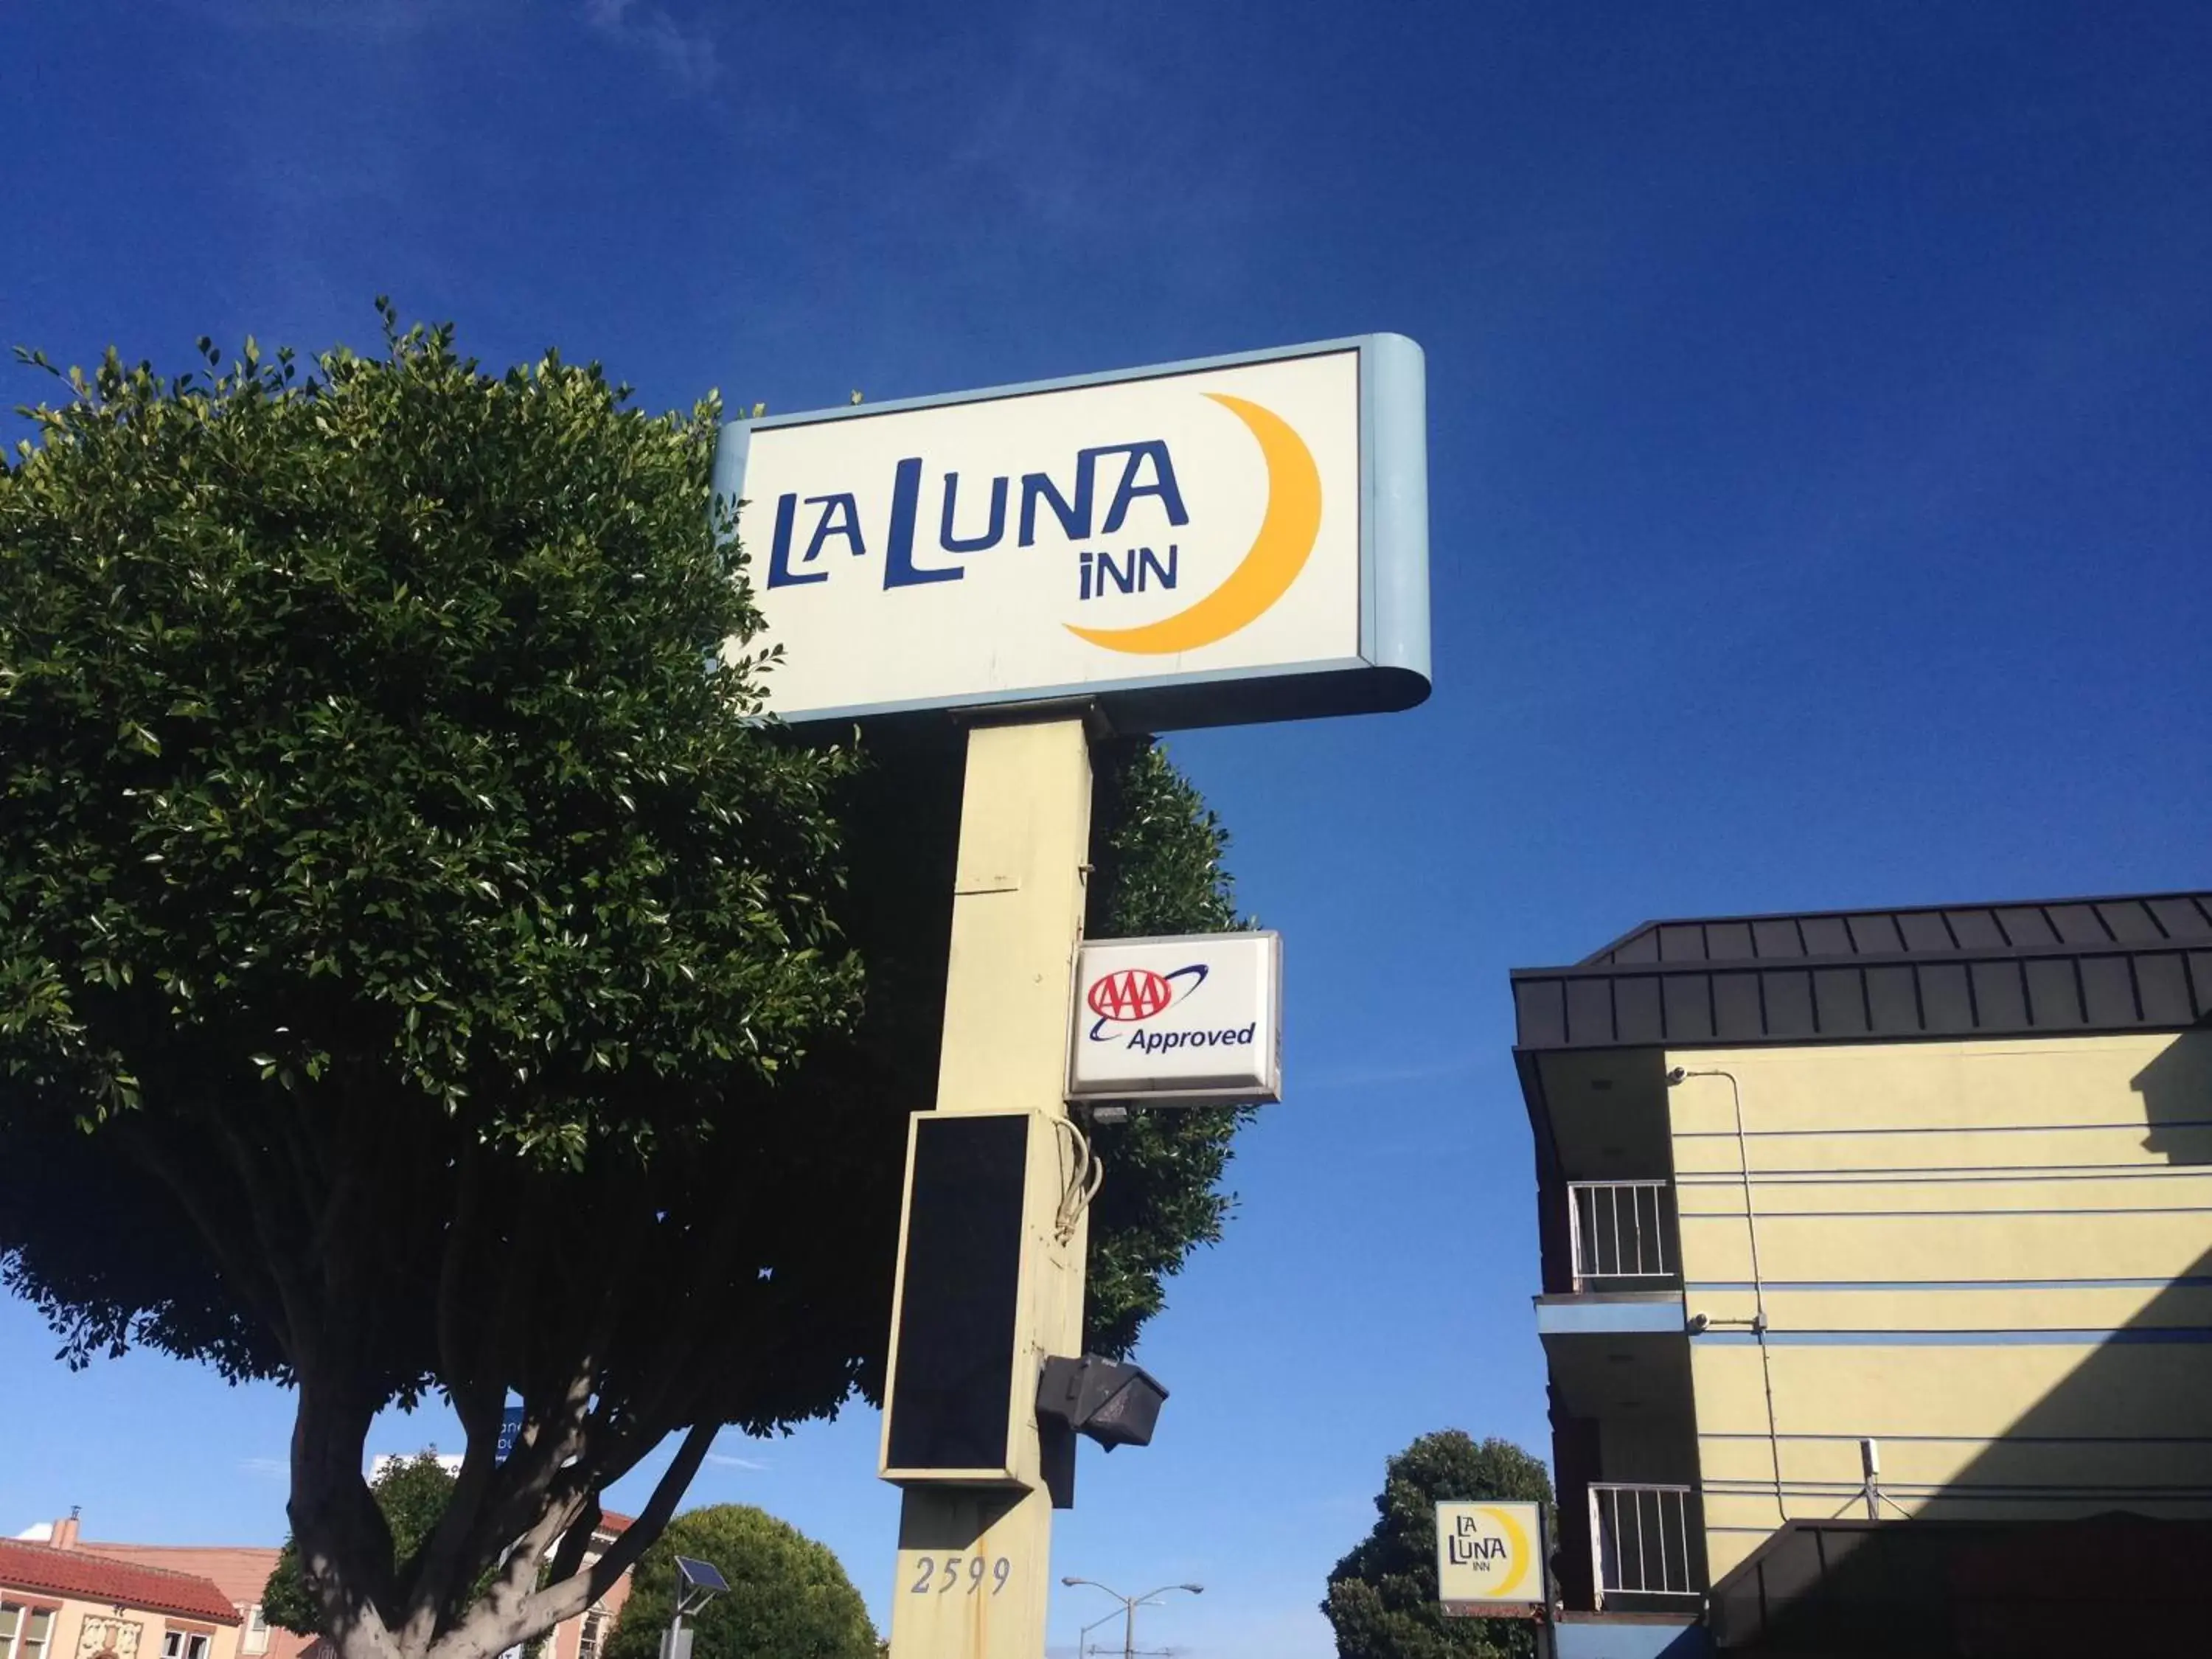 Property logo or sign in La Luna Inn